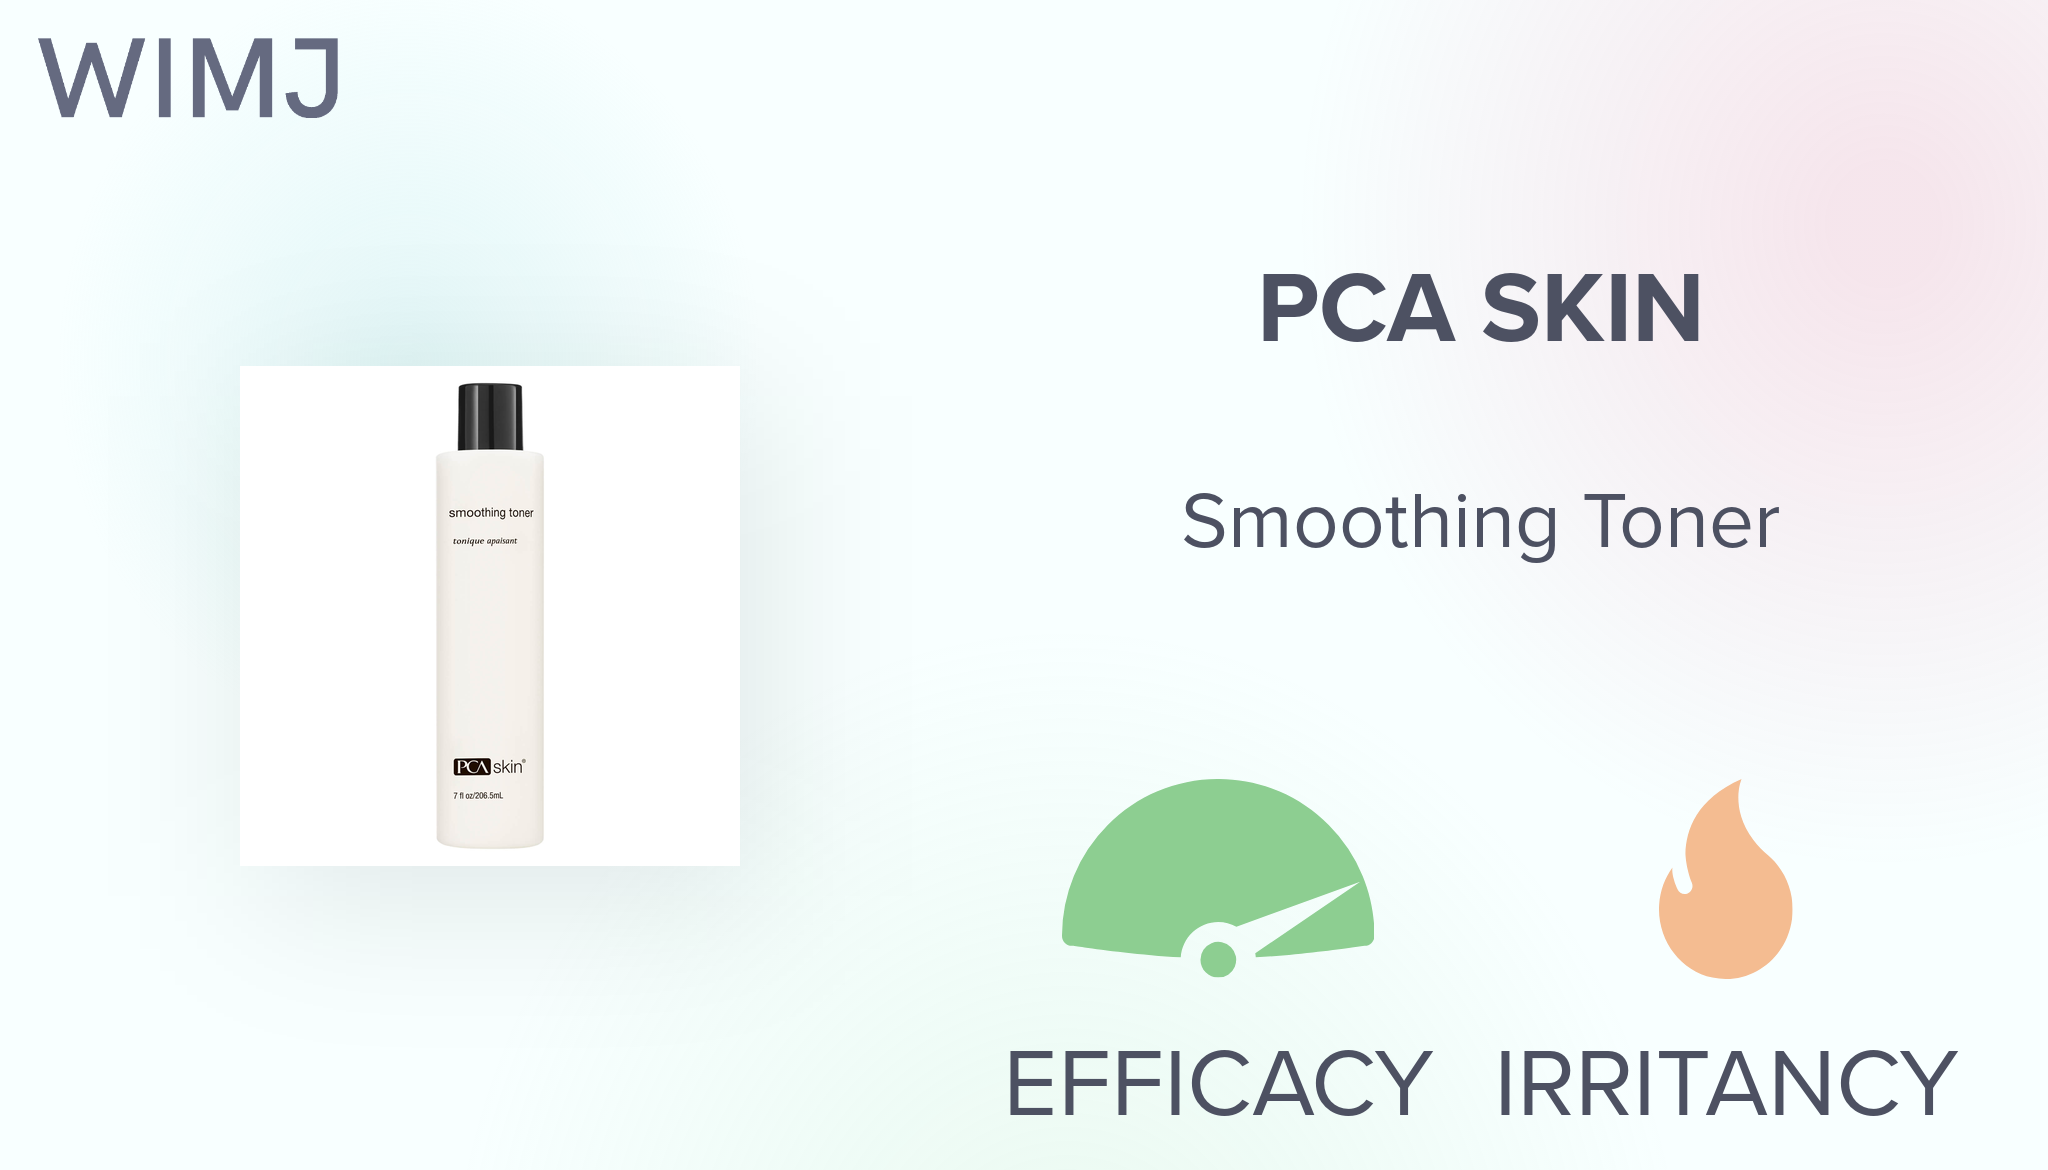 Smoothing Toner by PCA Skin